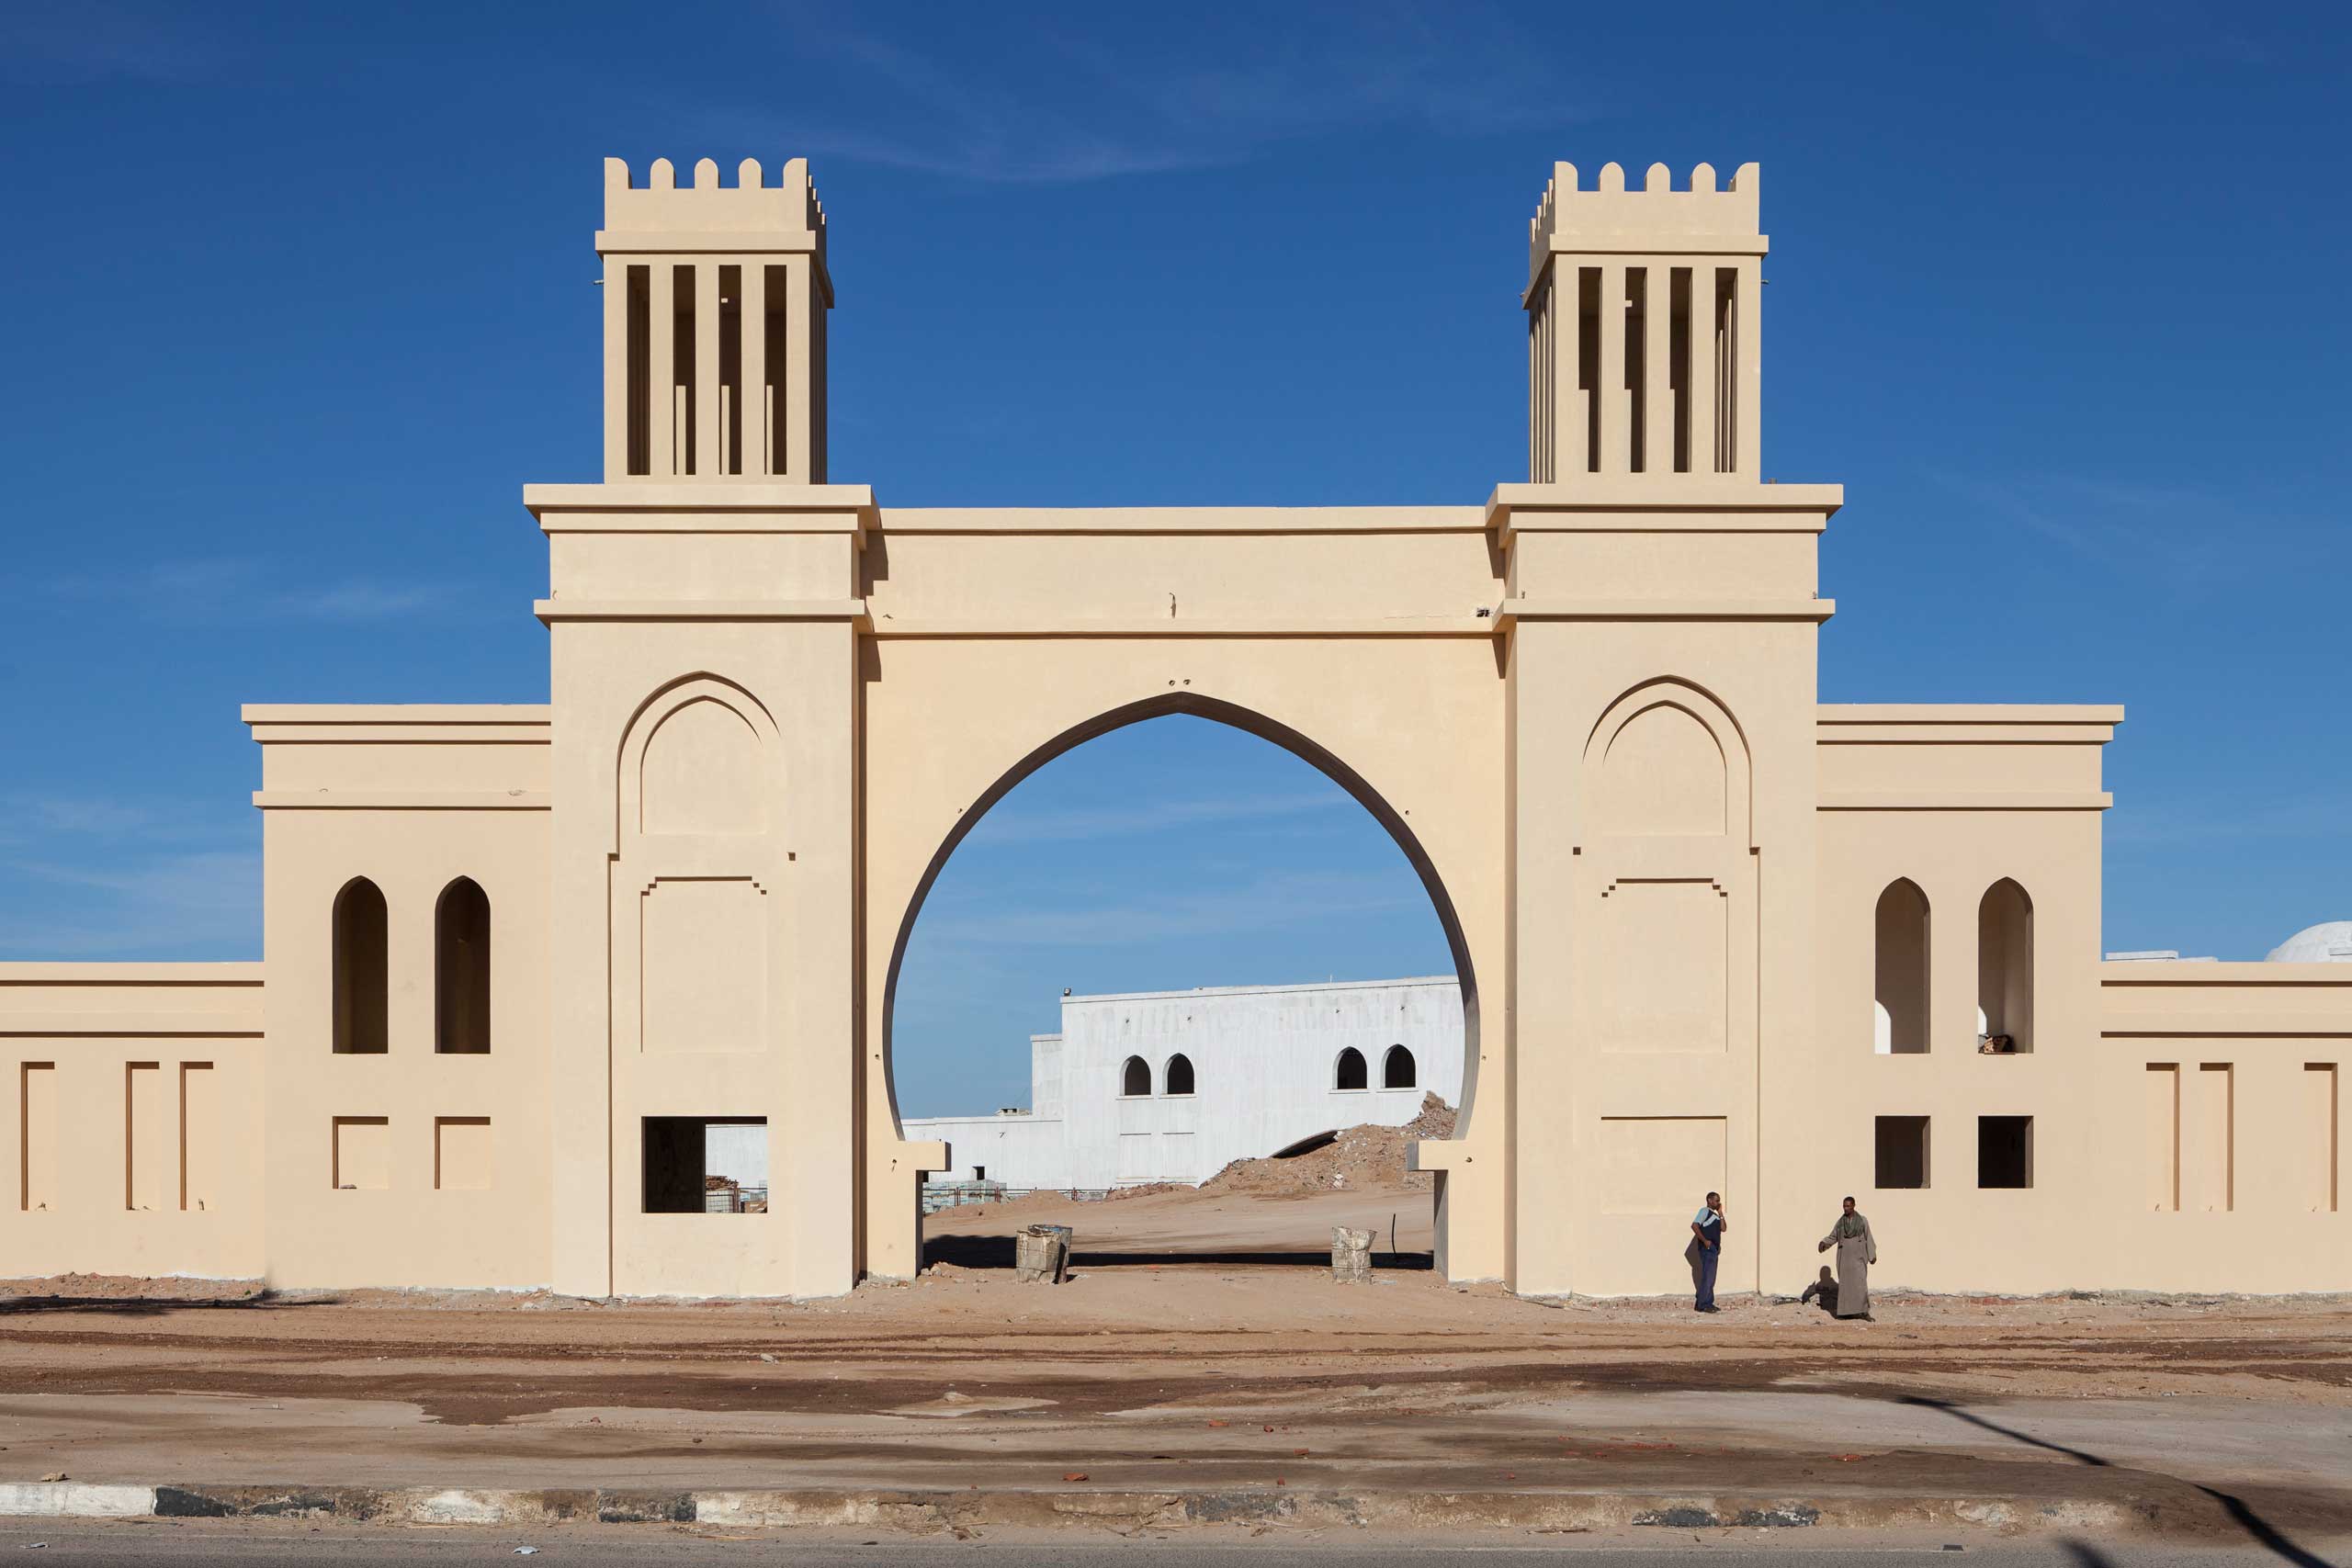 The entrance of the Kazar hotel, still under construction, in Sharm el Sheikh, Sinai, Jan. 2015.